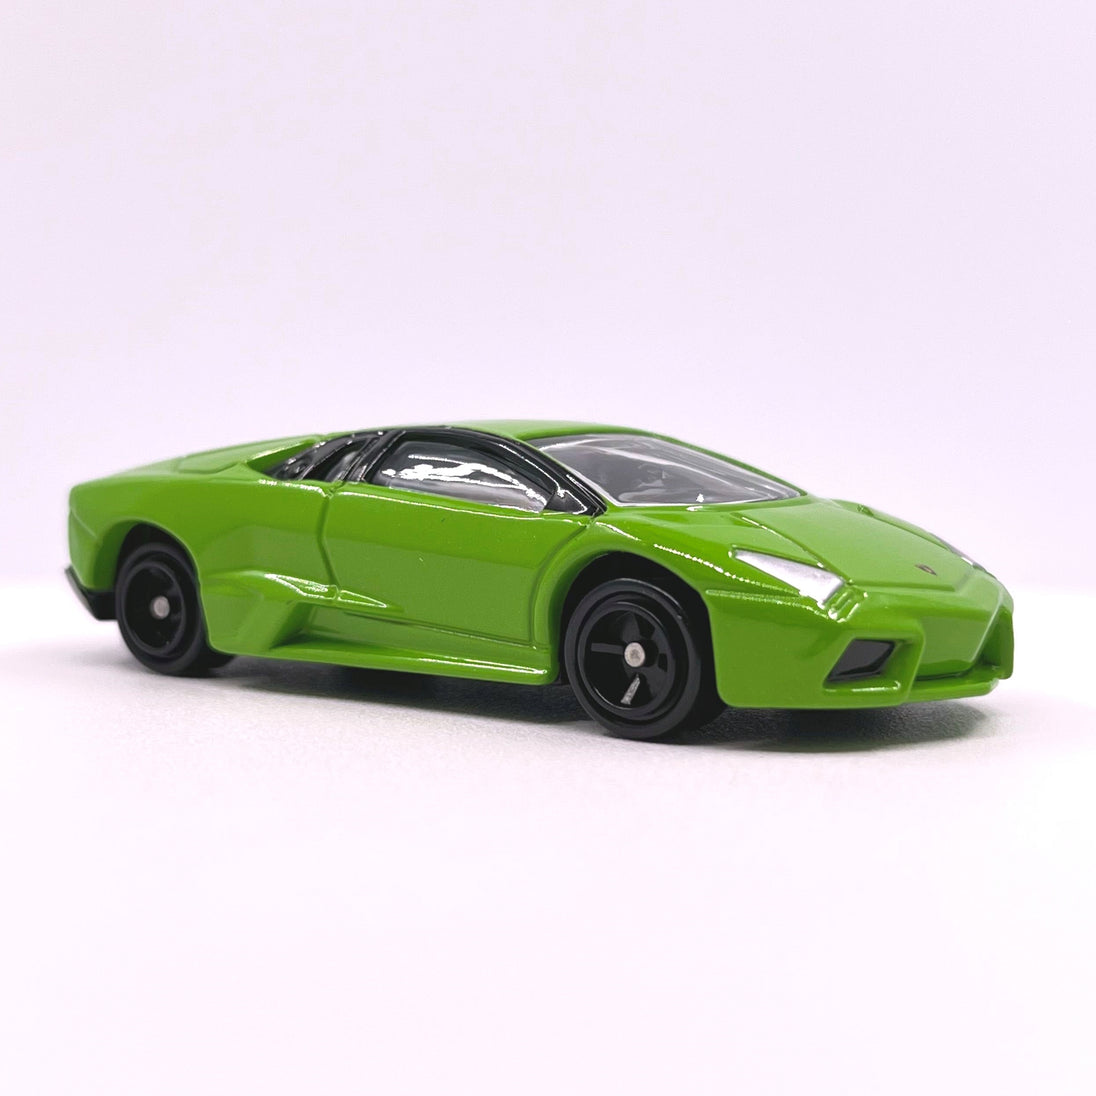 1:65 Lamborghini Reventon Alloy Tomica Diecast Car Model by Takara Tomy